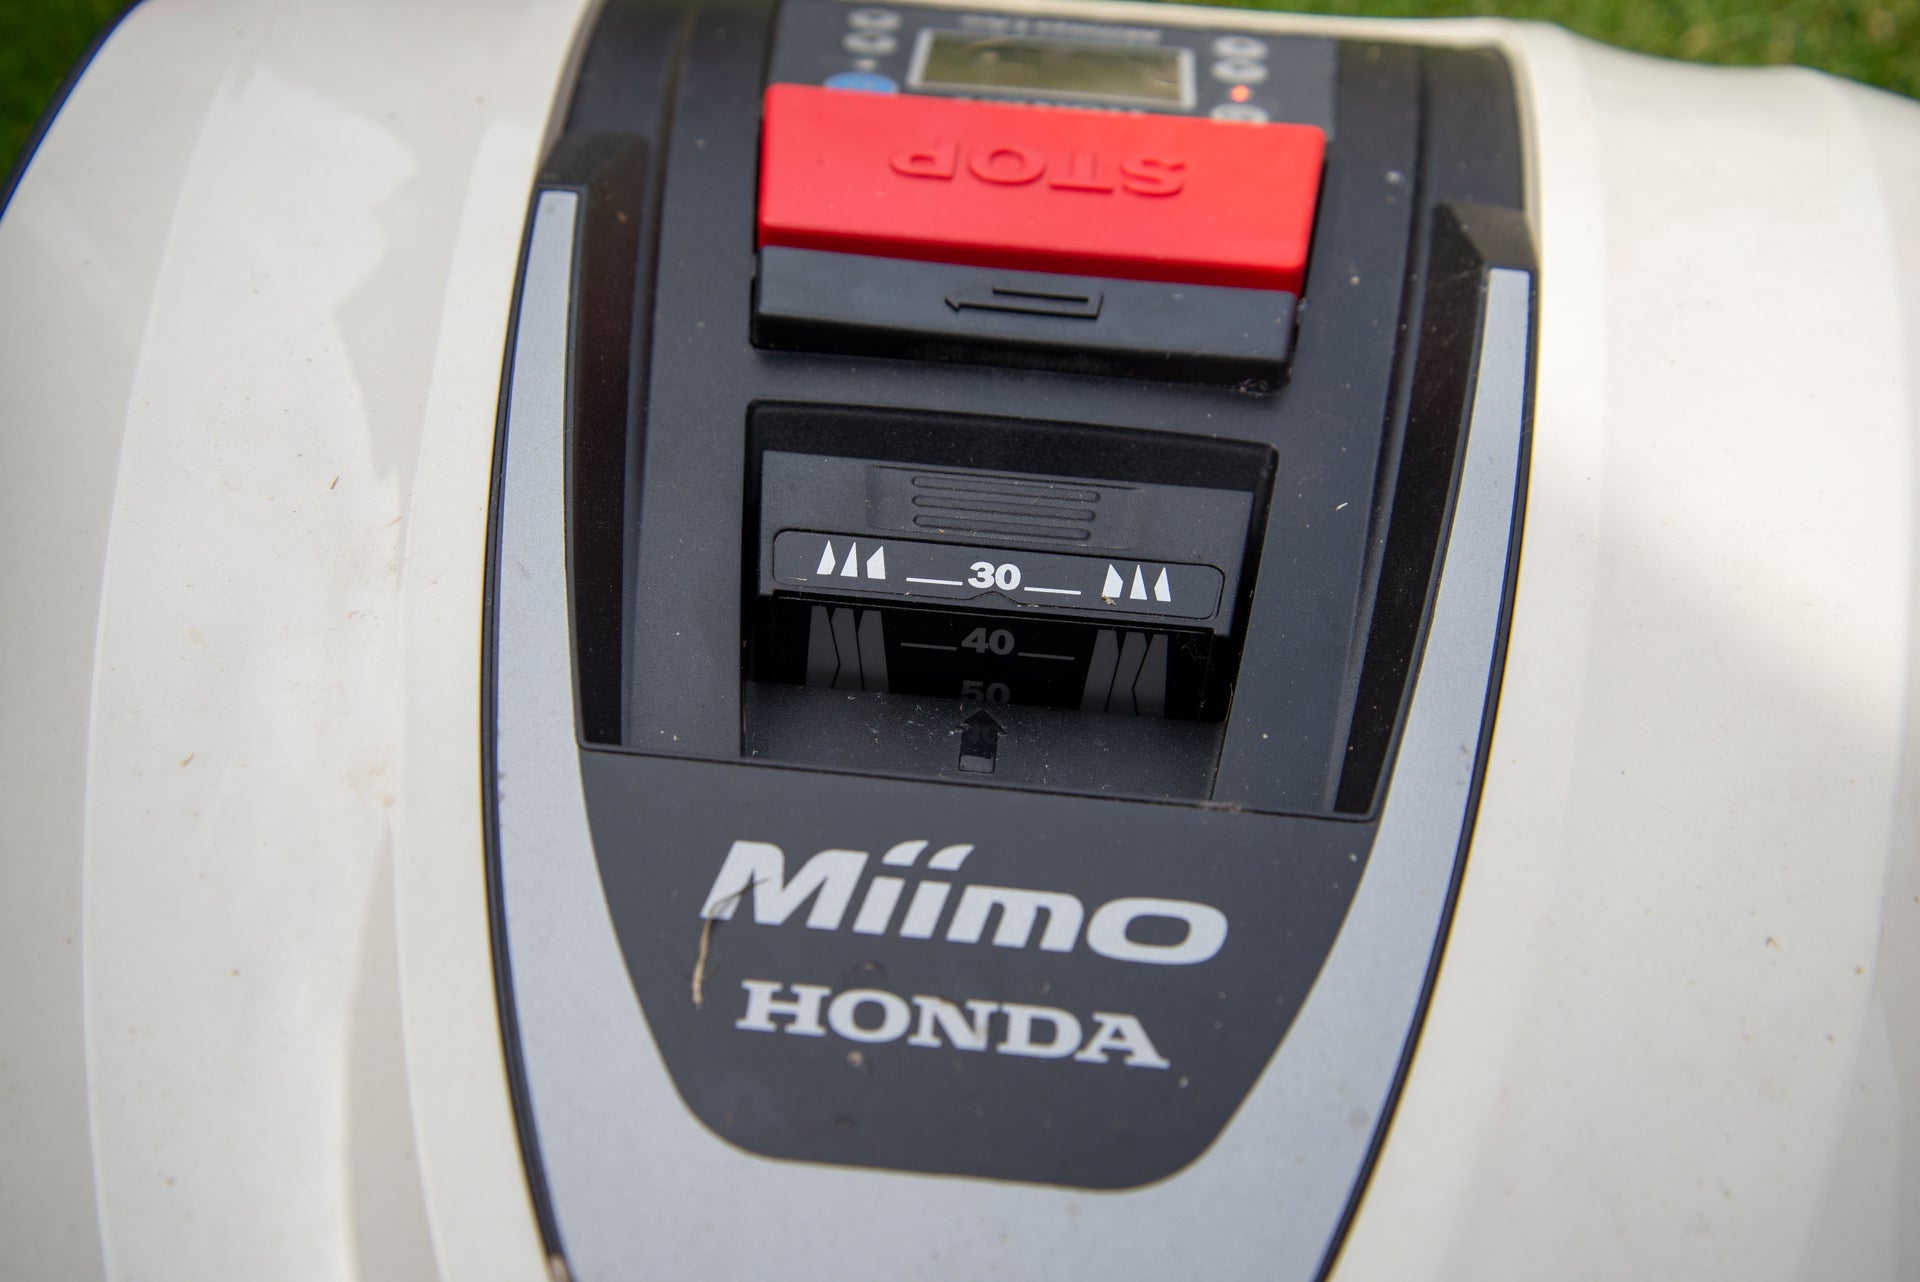 Honda Miimo HRM 40 LiveClose up image of a Honda Miimo HRM 40's control section